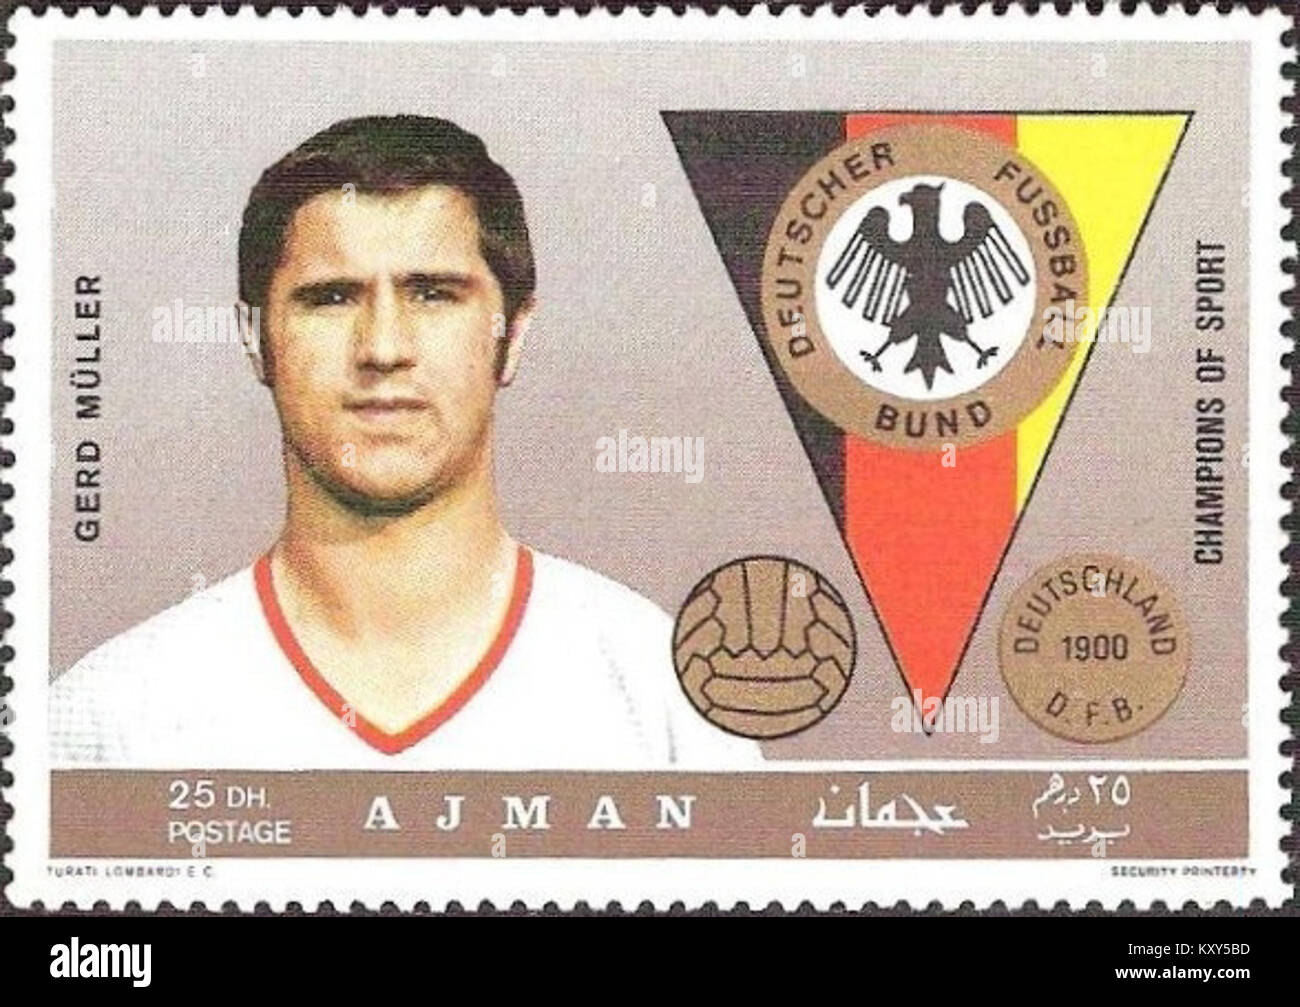 Gerd Müller 1969 Ajman stamp Stock Photo